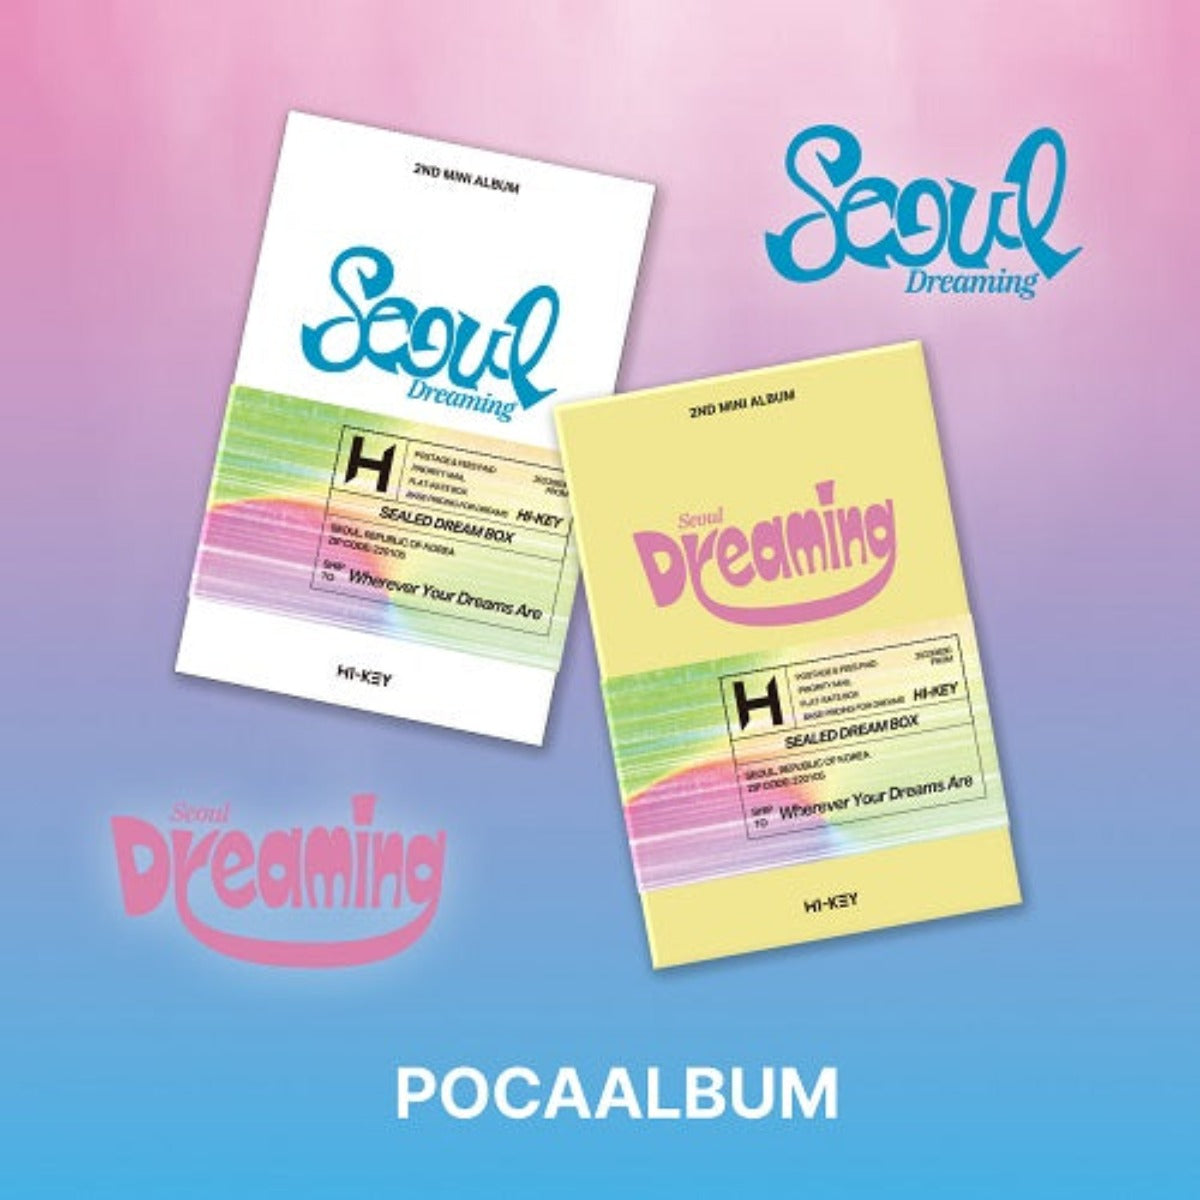 H1-KEY Mini Album Vol. 2 - Seoul Dreaming [Poca Album - Random Cover]